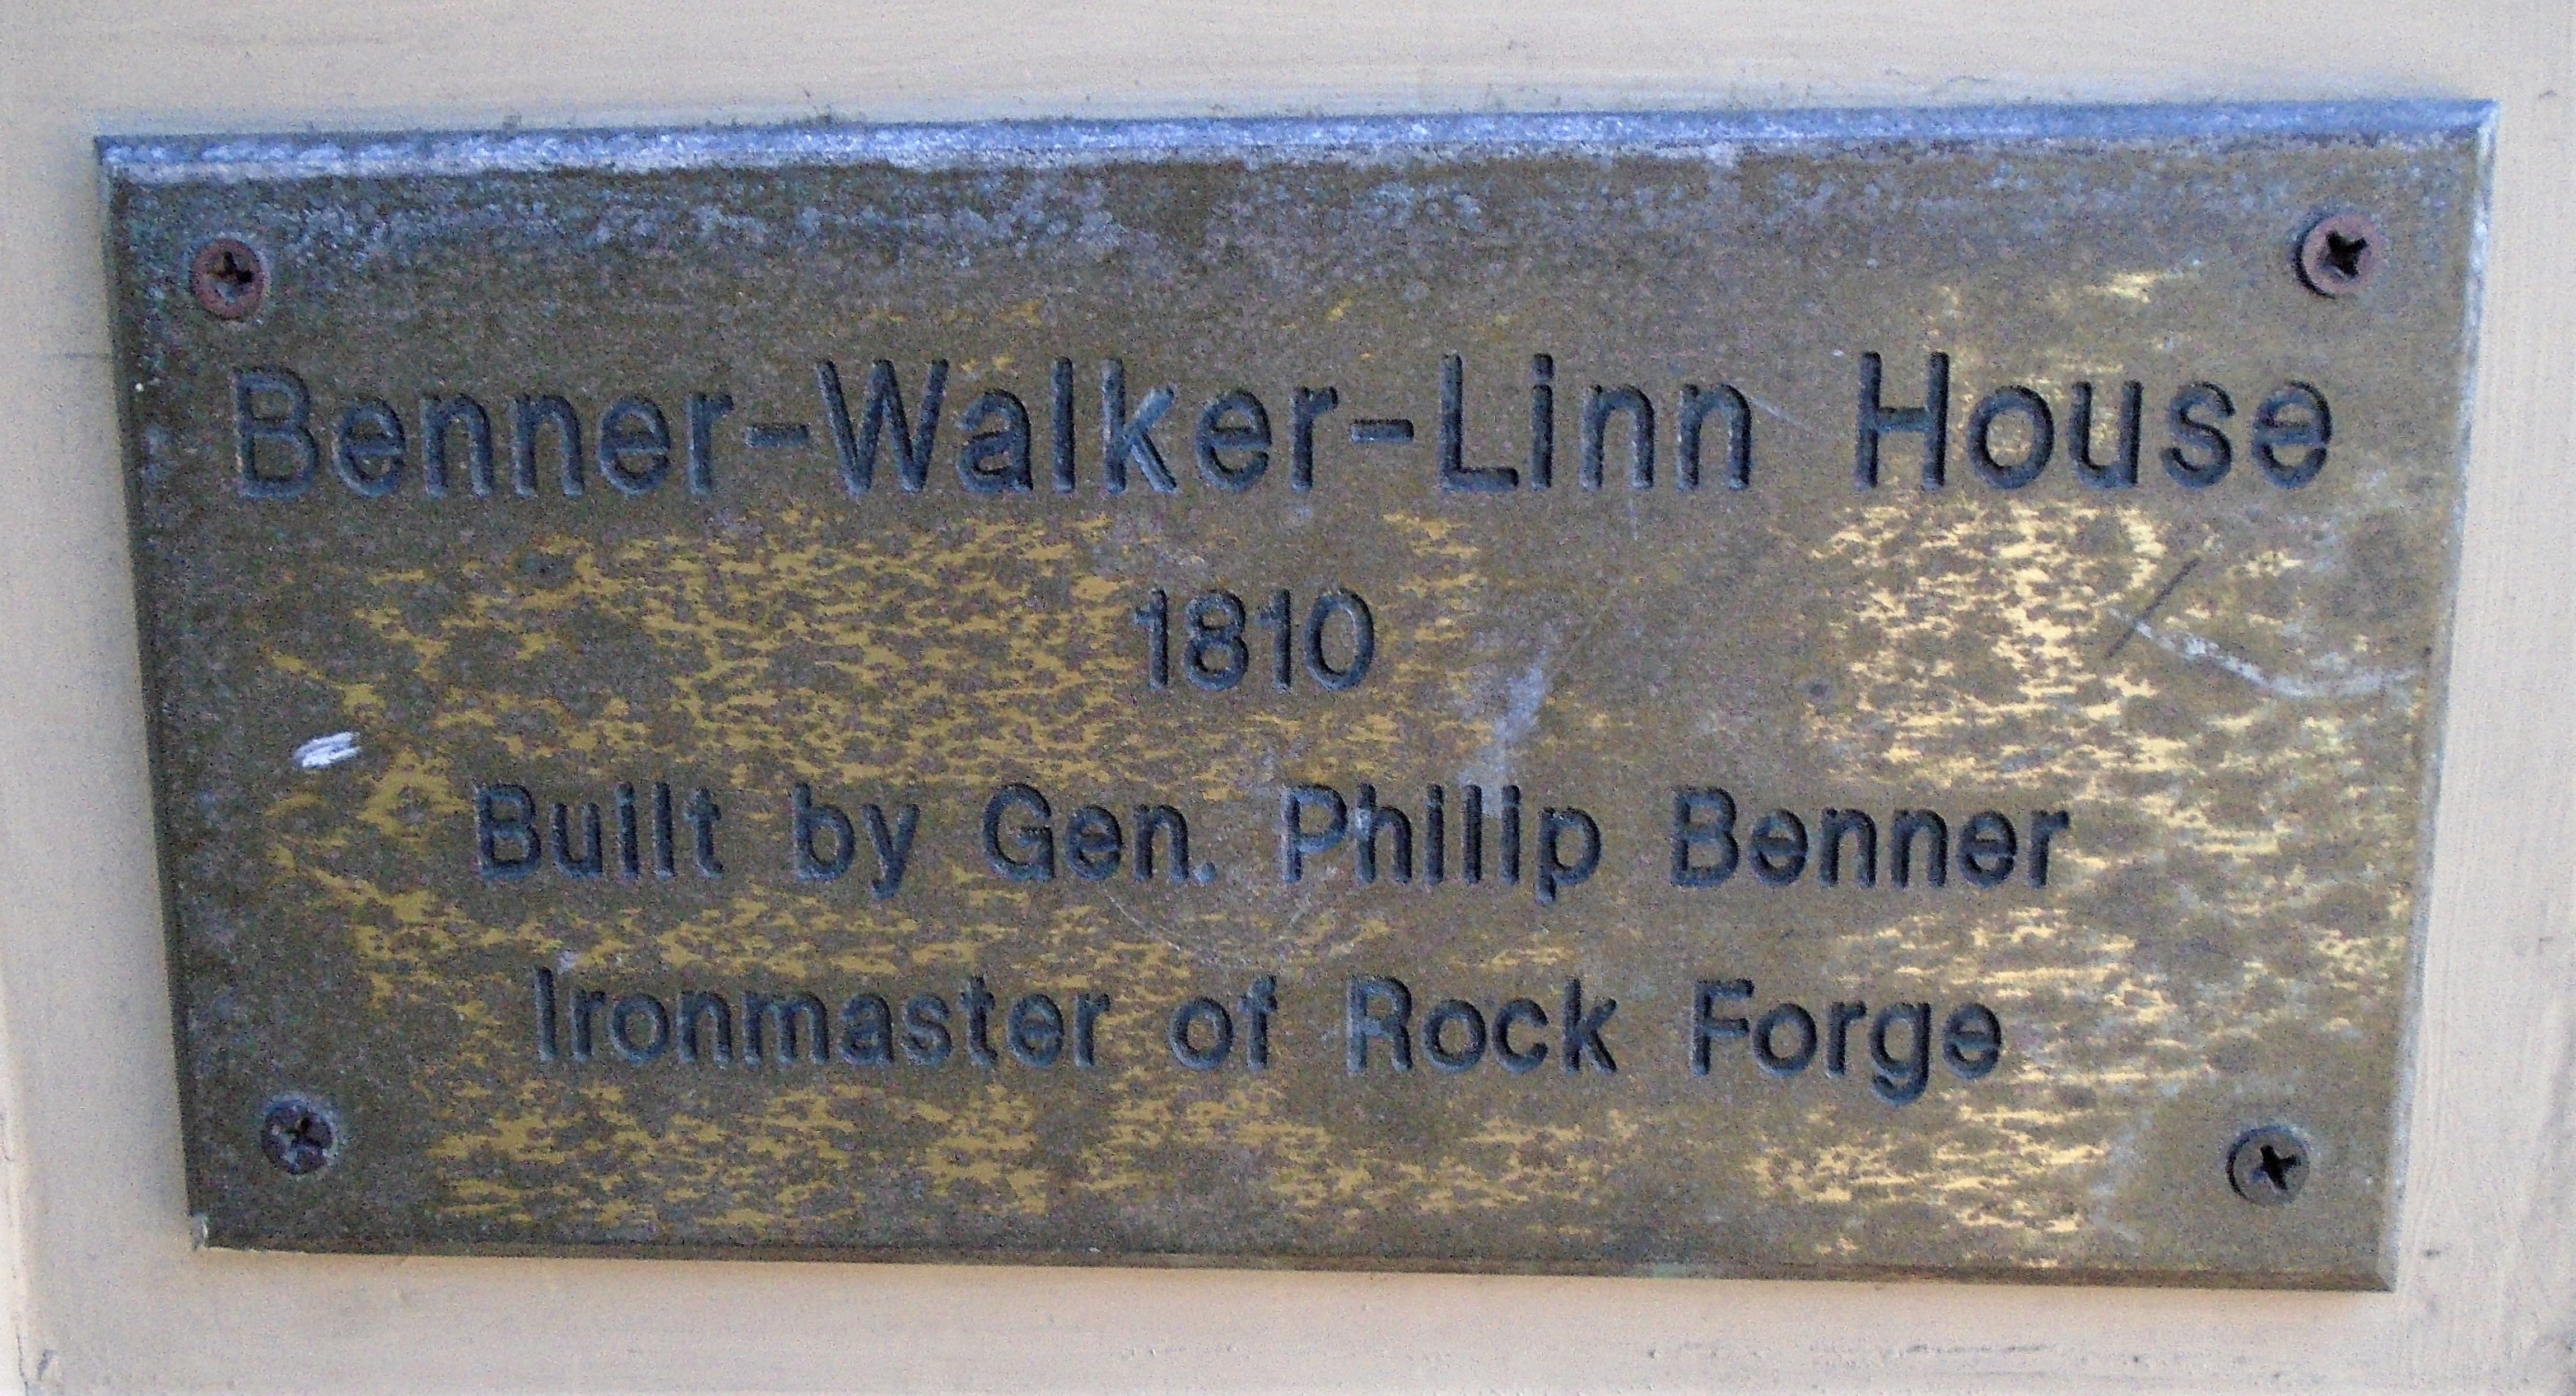 Benner-Walker-Linn House Marker